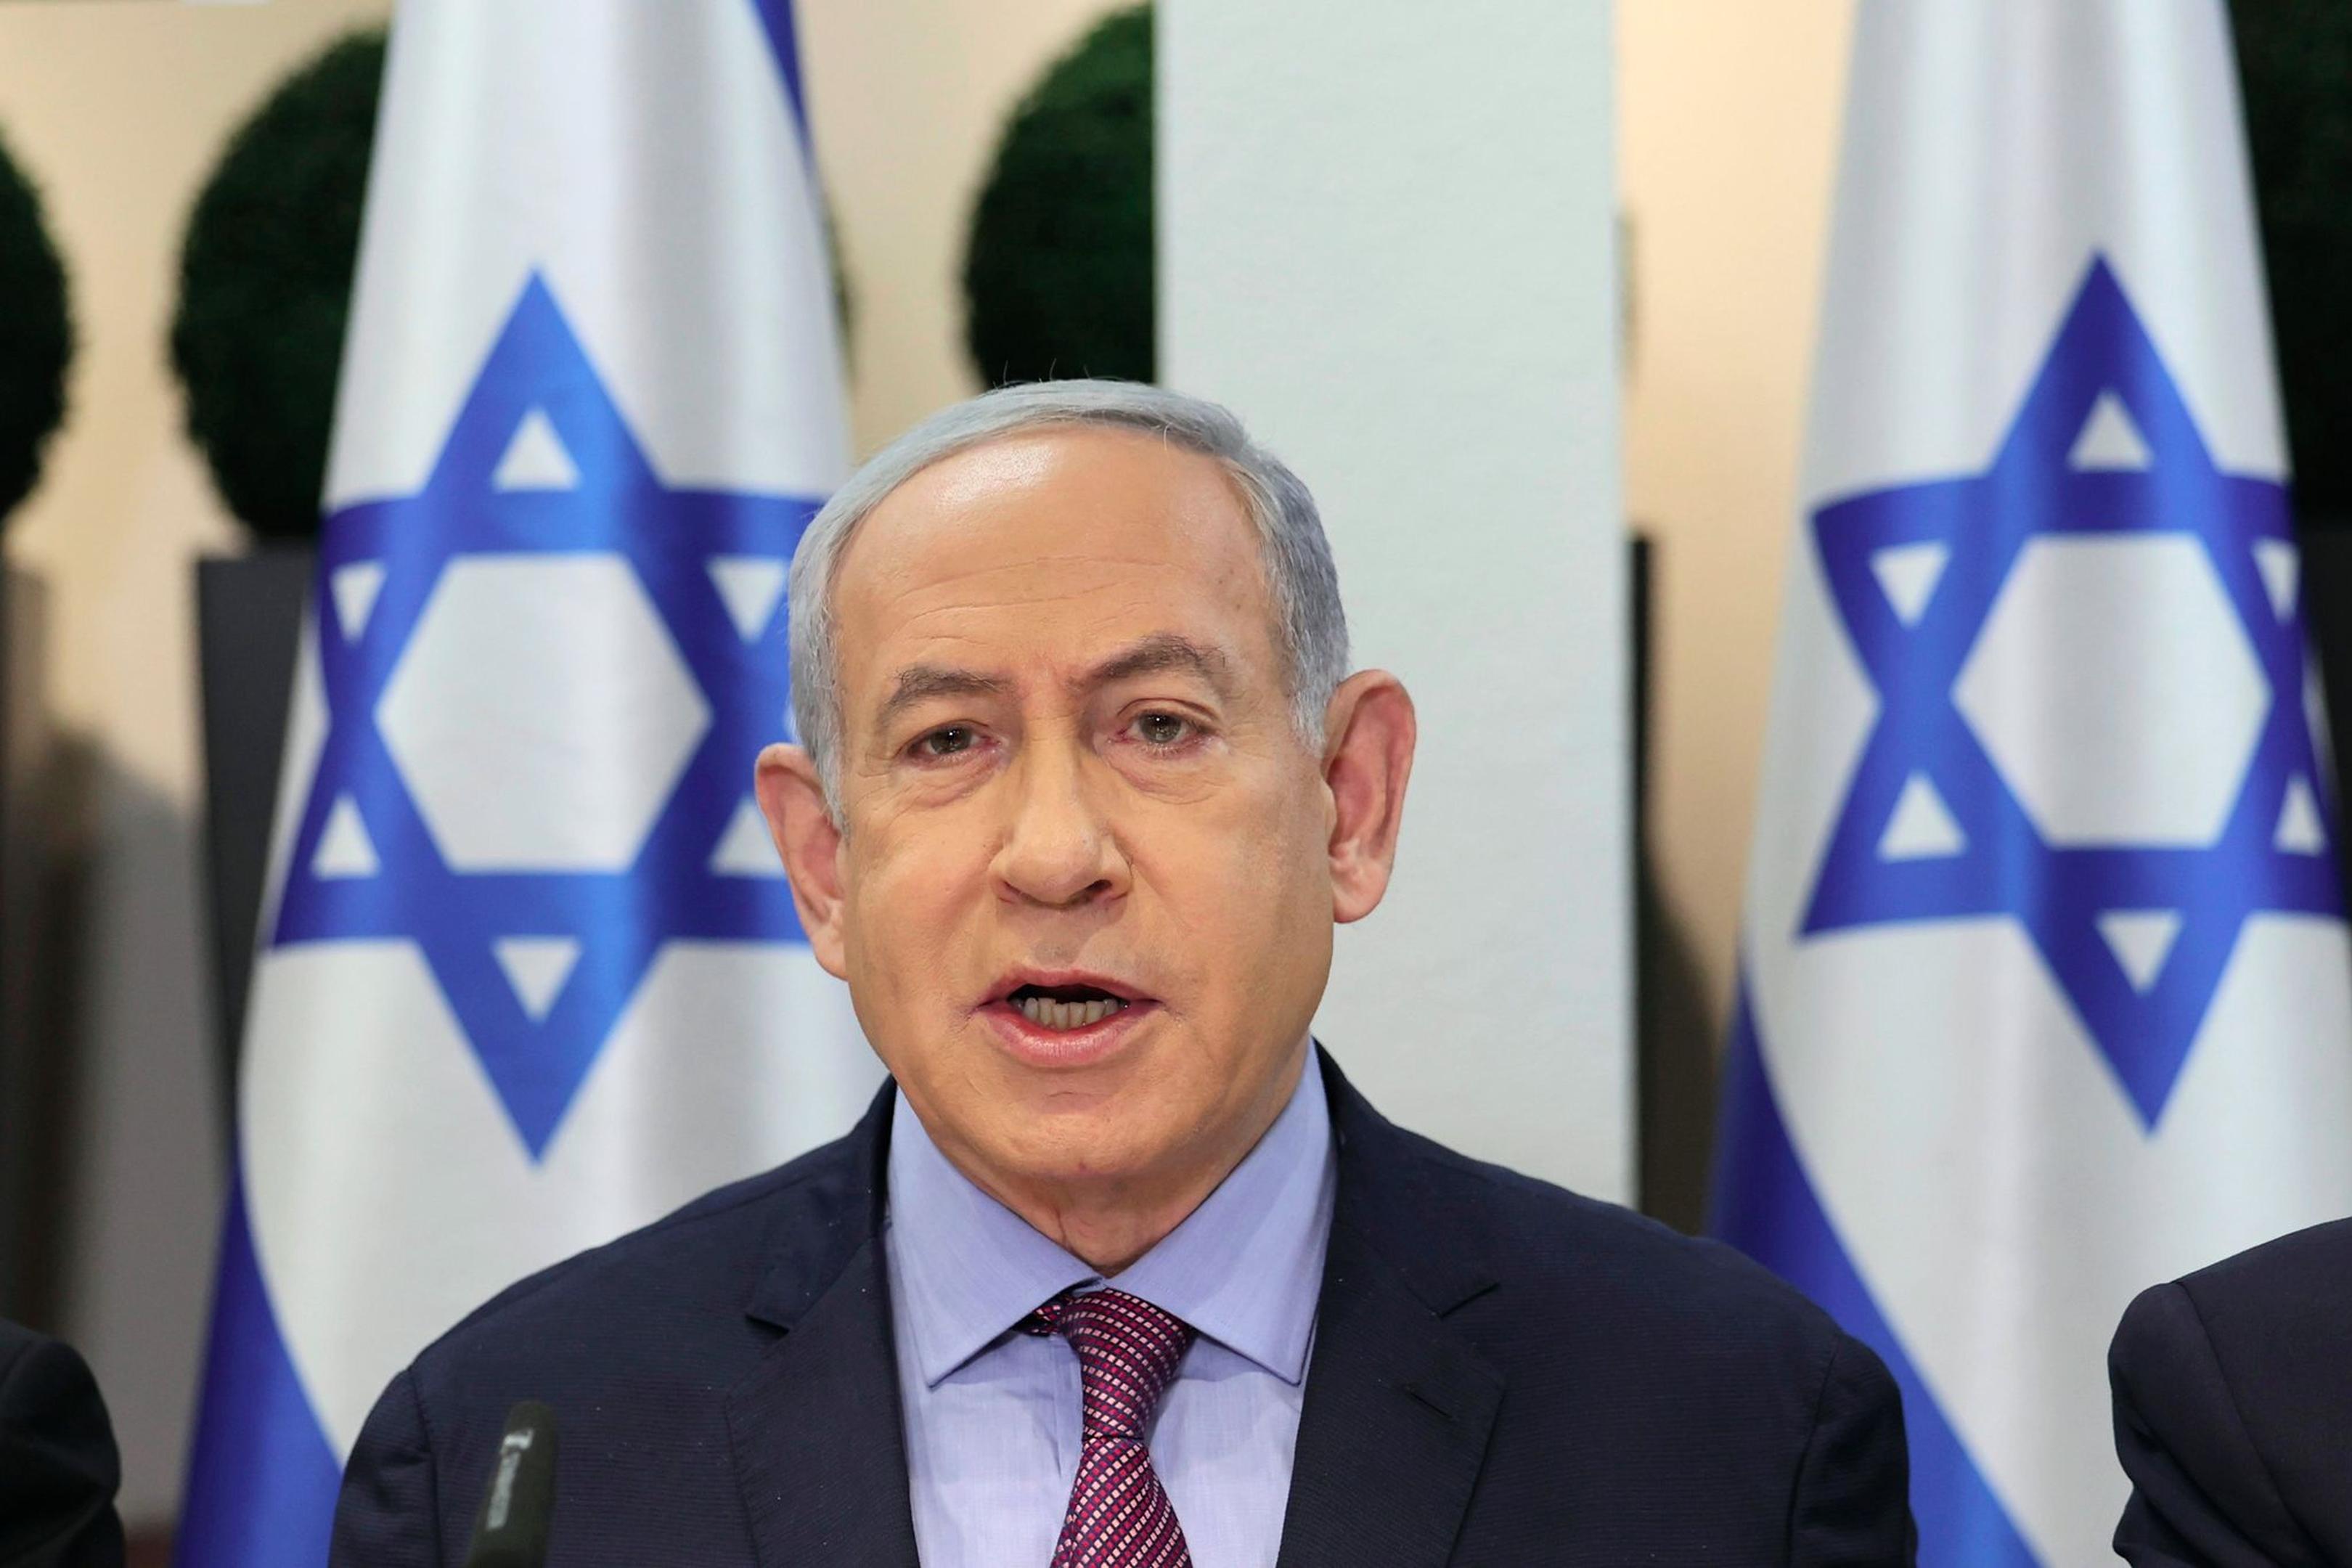 Israels Ministerpräsident Benjamin Netanjahu hält an seinem Kurs fest.